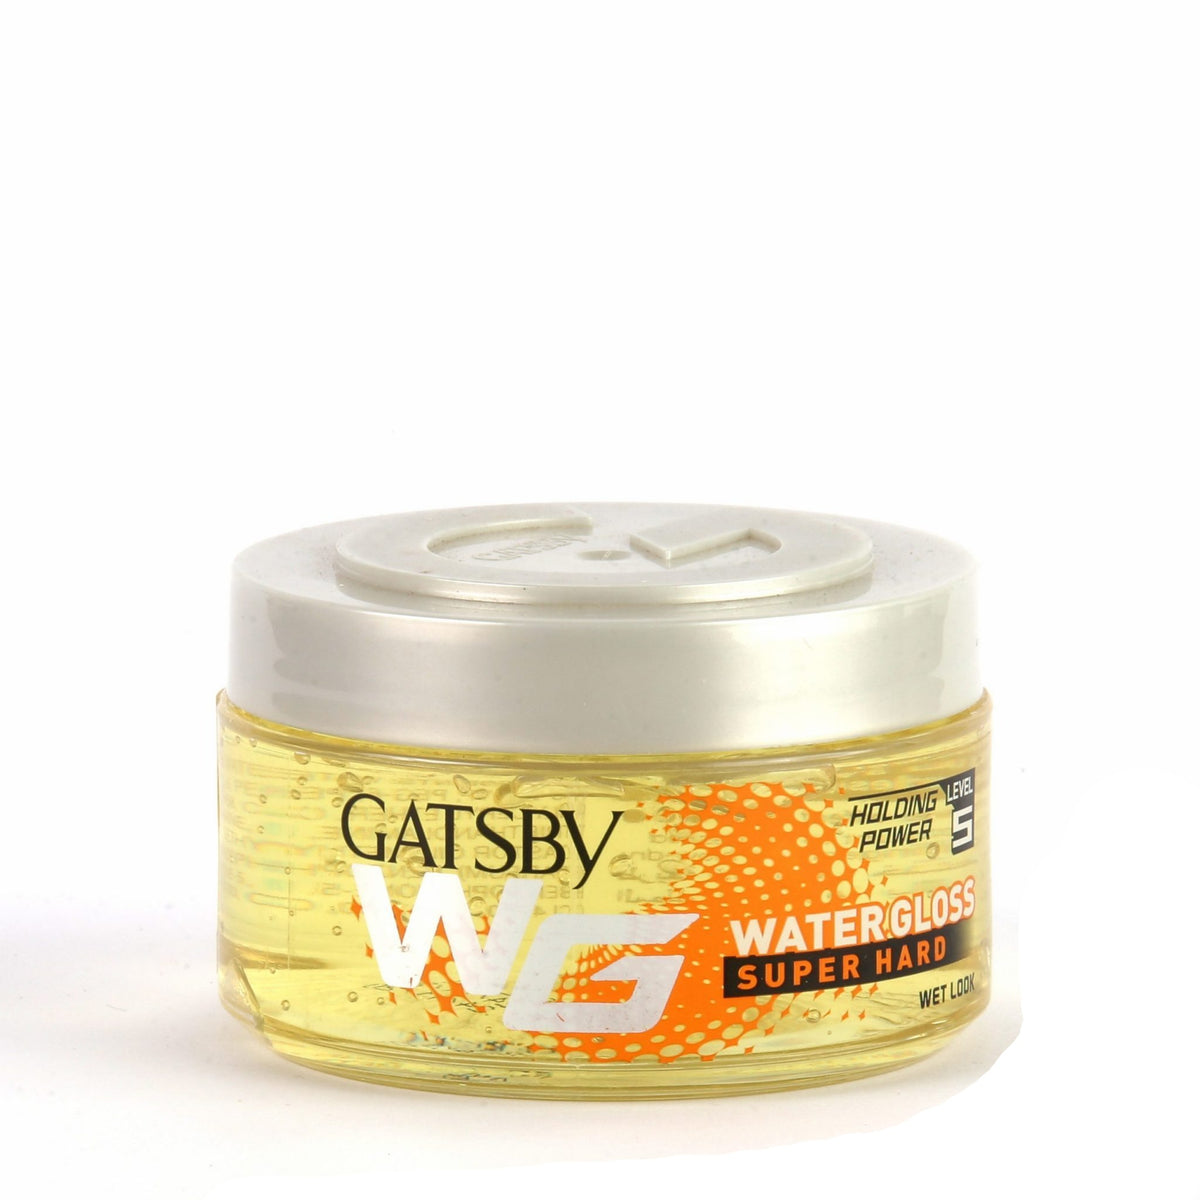 Gatsby Water Gloss Super Hard Level 05 150g freeshipping - lasertag.pk